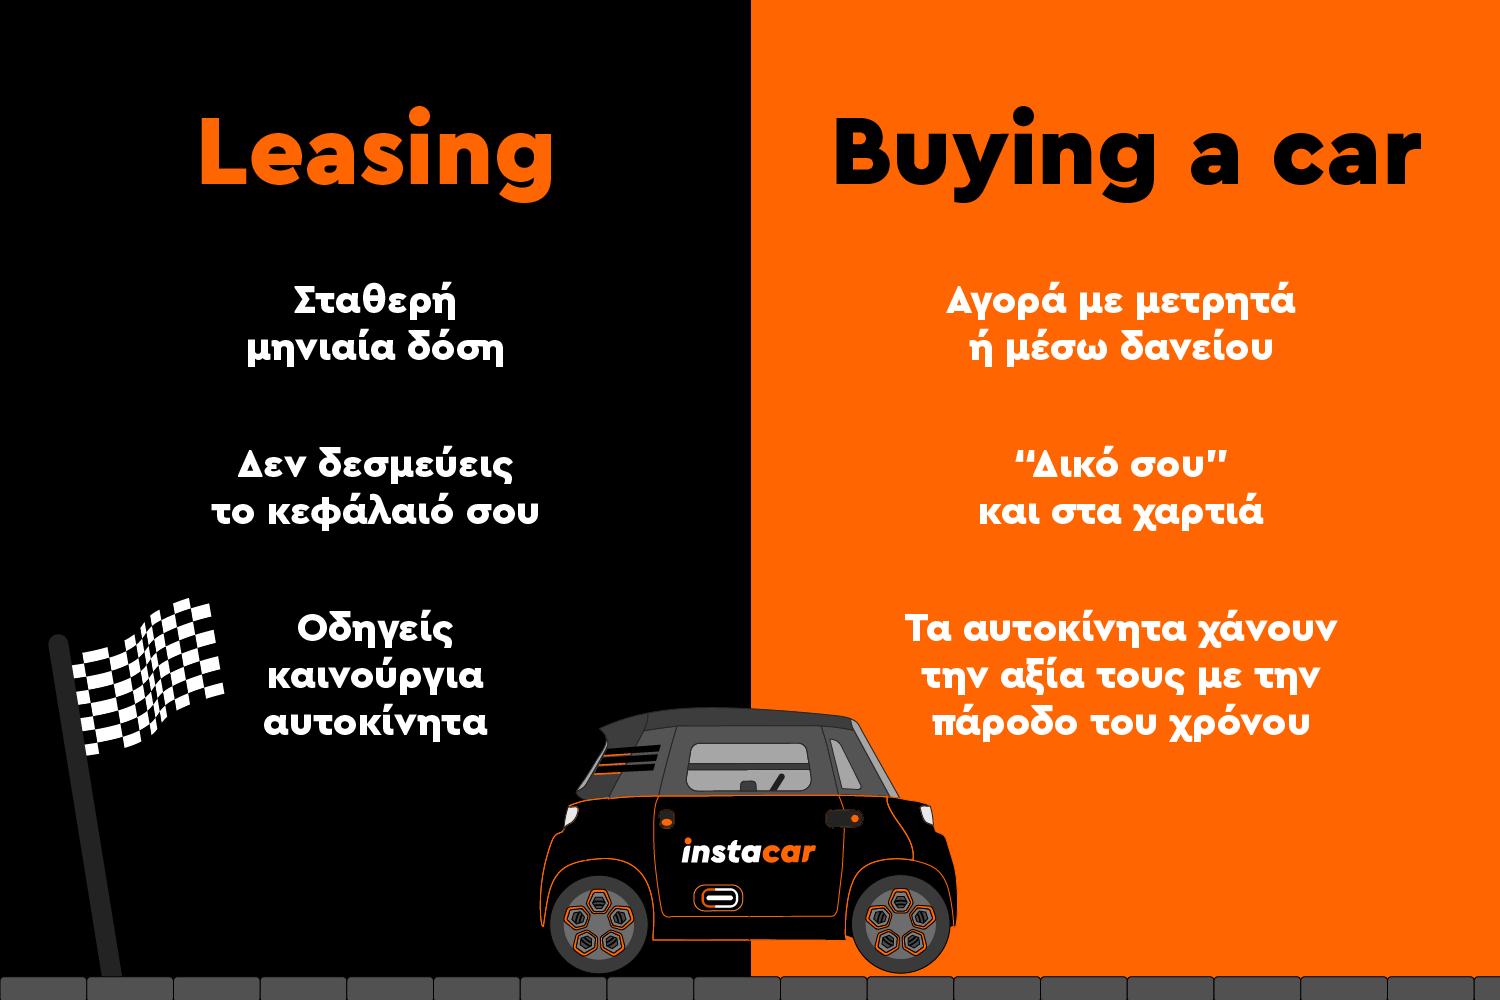 leasing vs buying a car